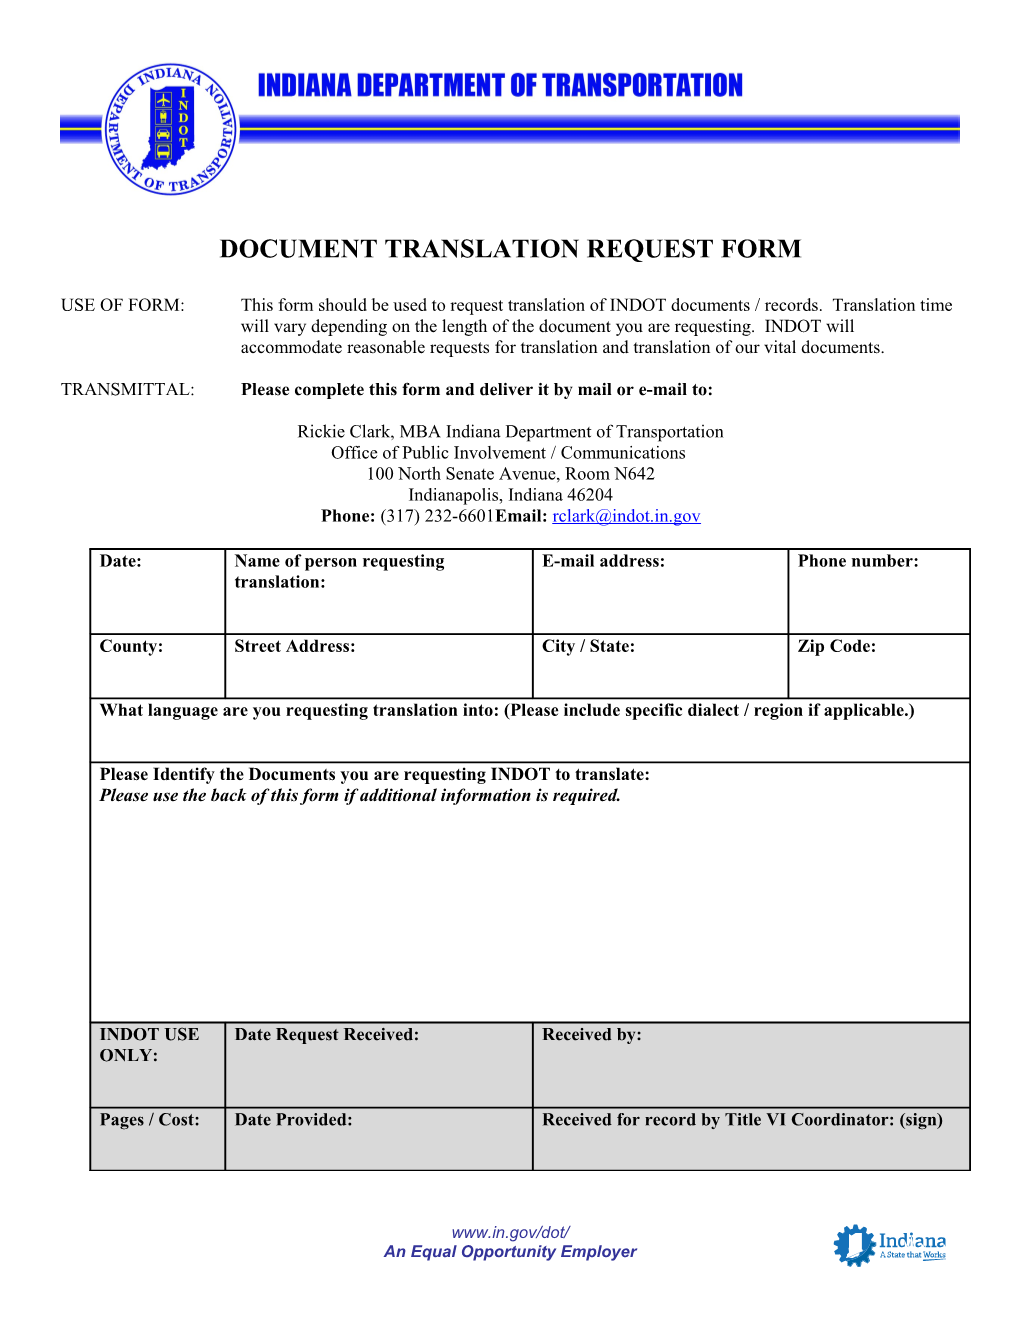 Document Translation Request Form